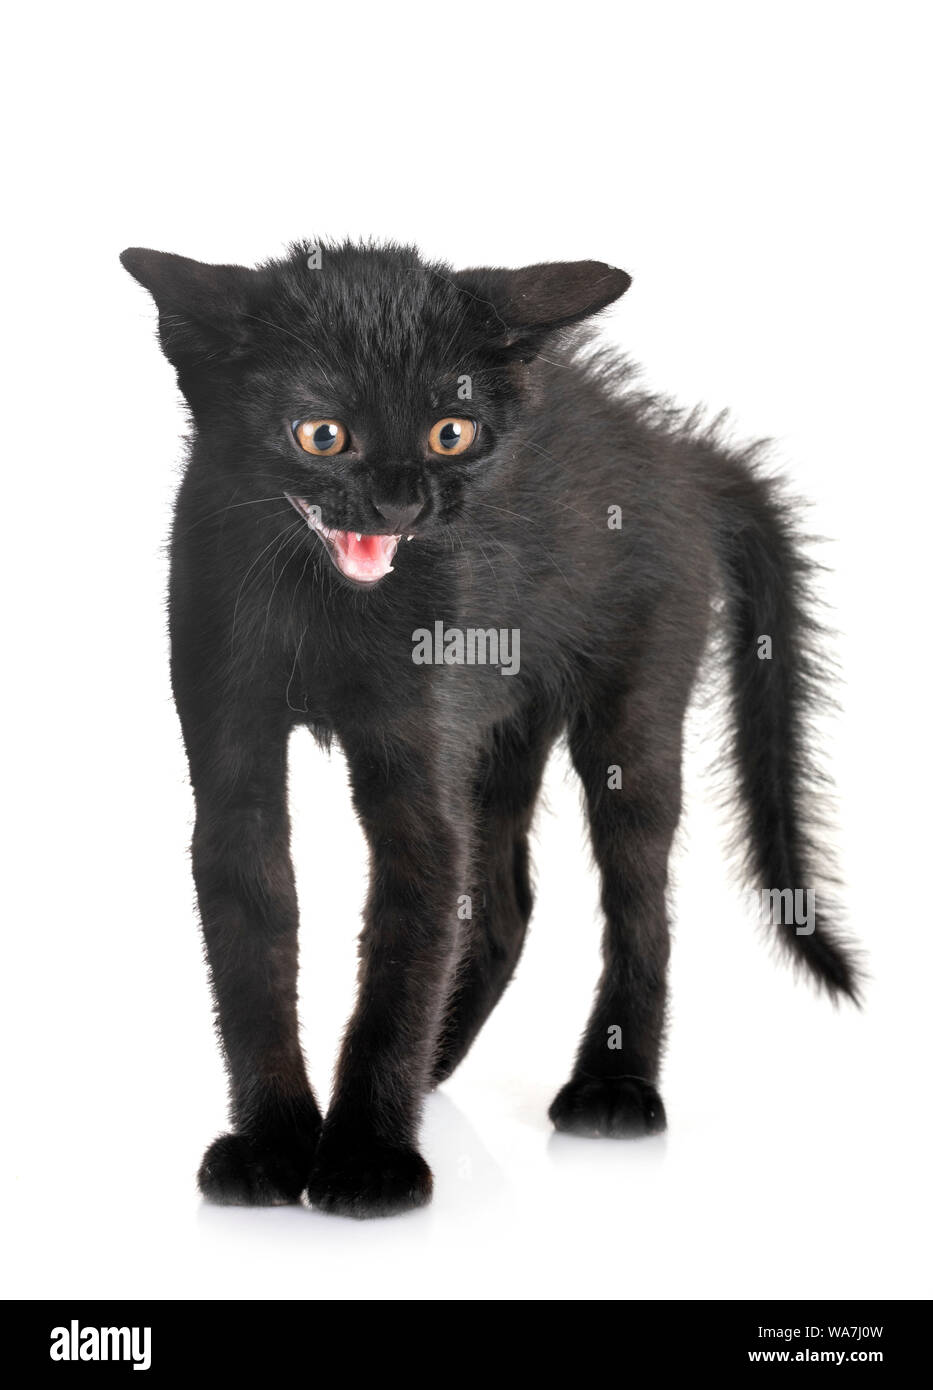 black kitten in front of white background Stock Photo